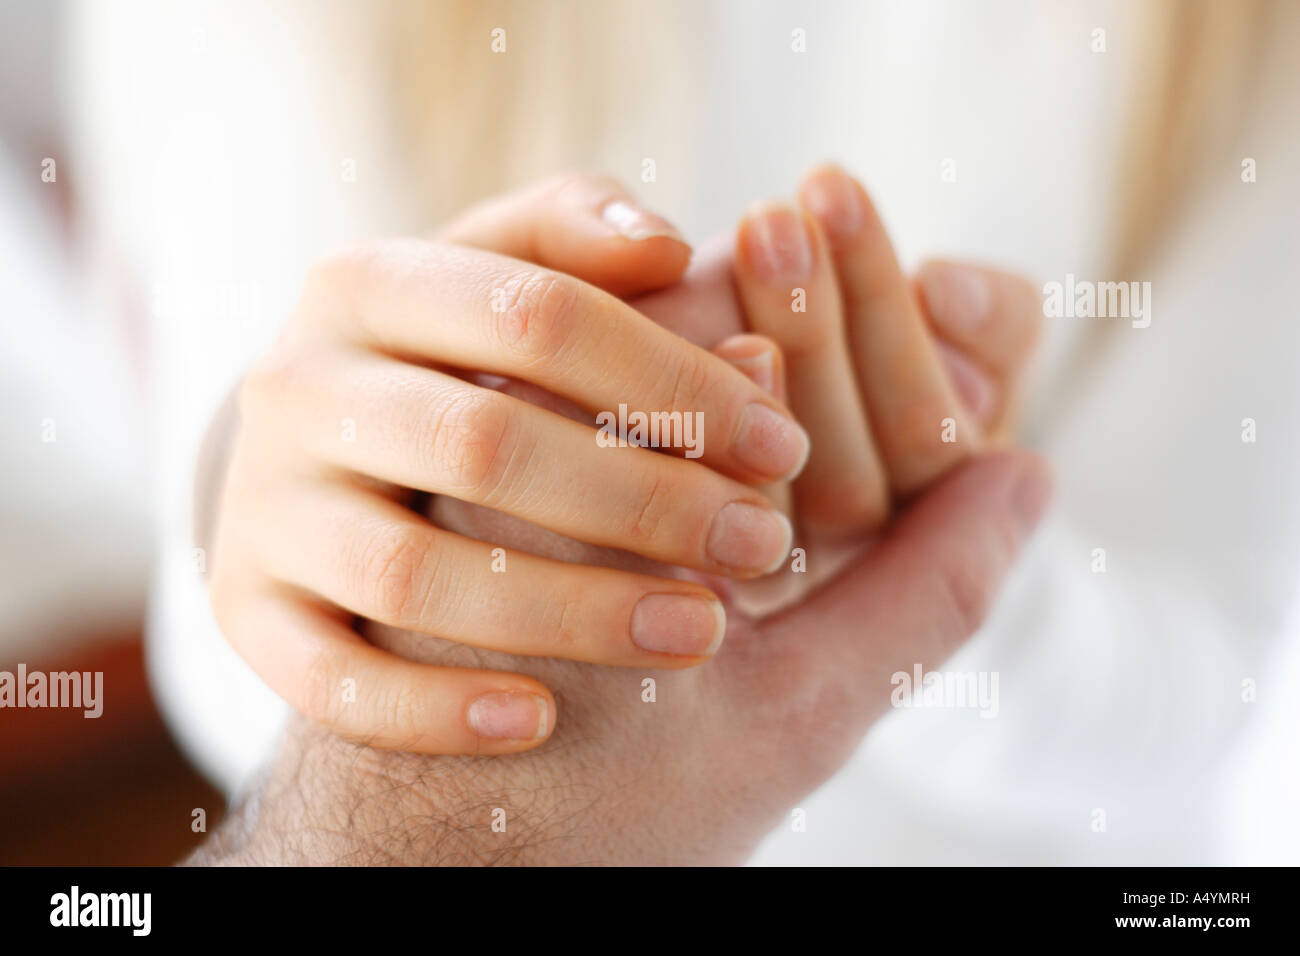 touching hands Stock Photo